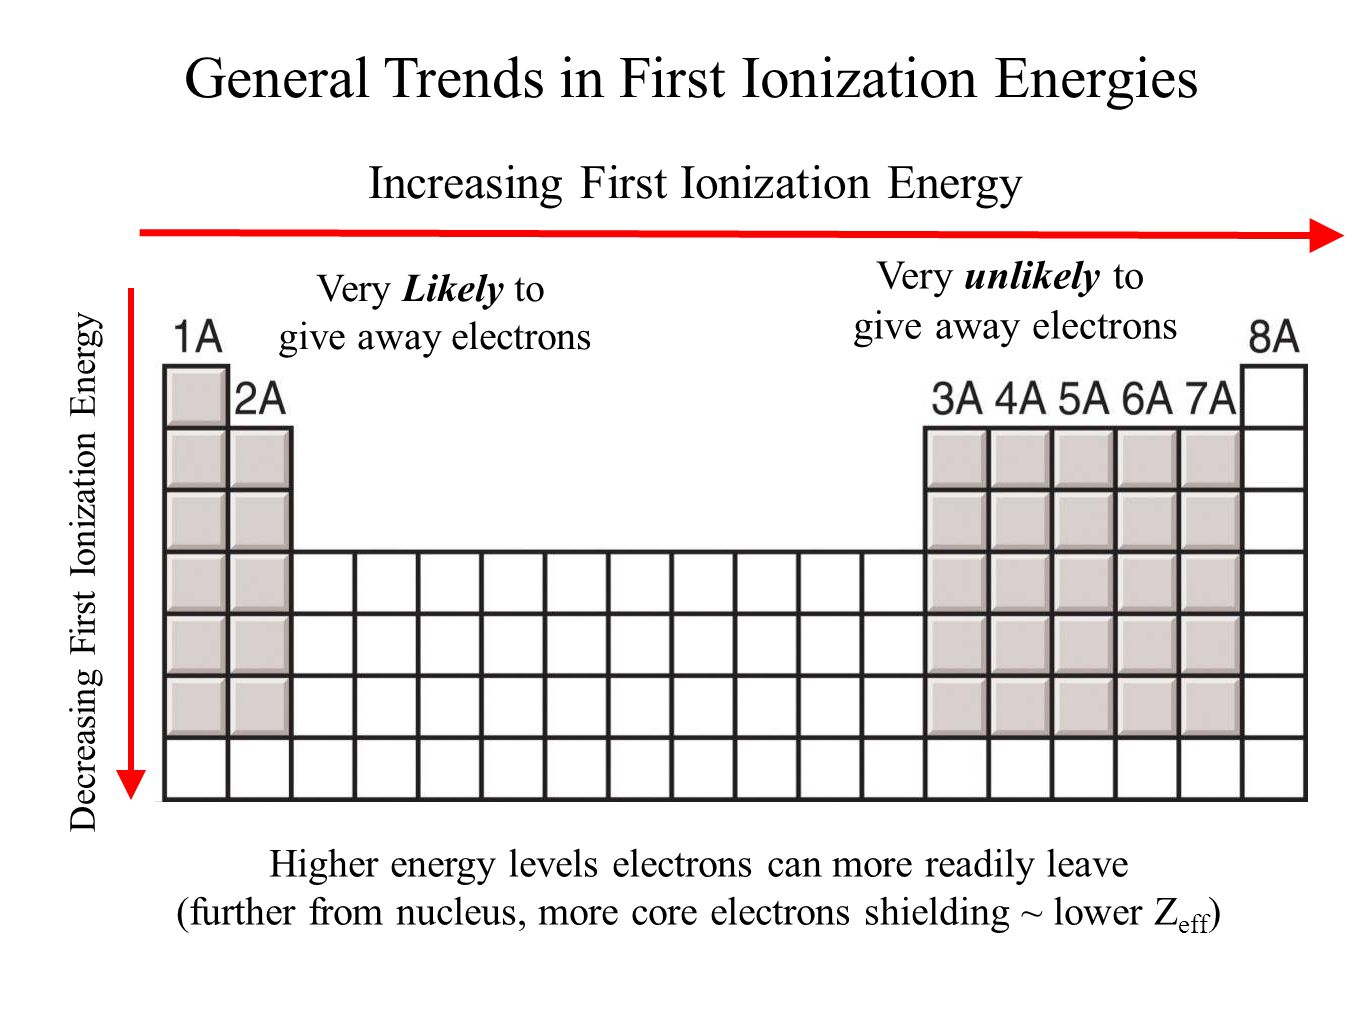 Ionization energy